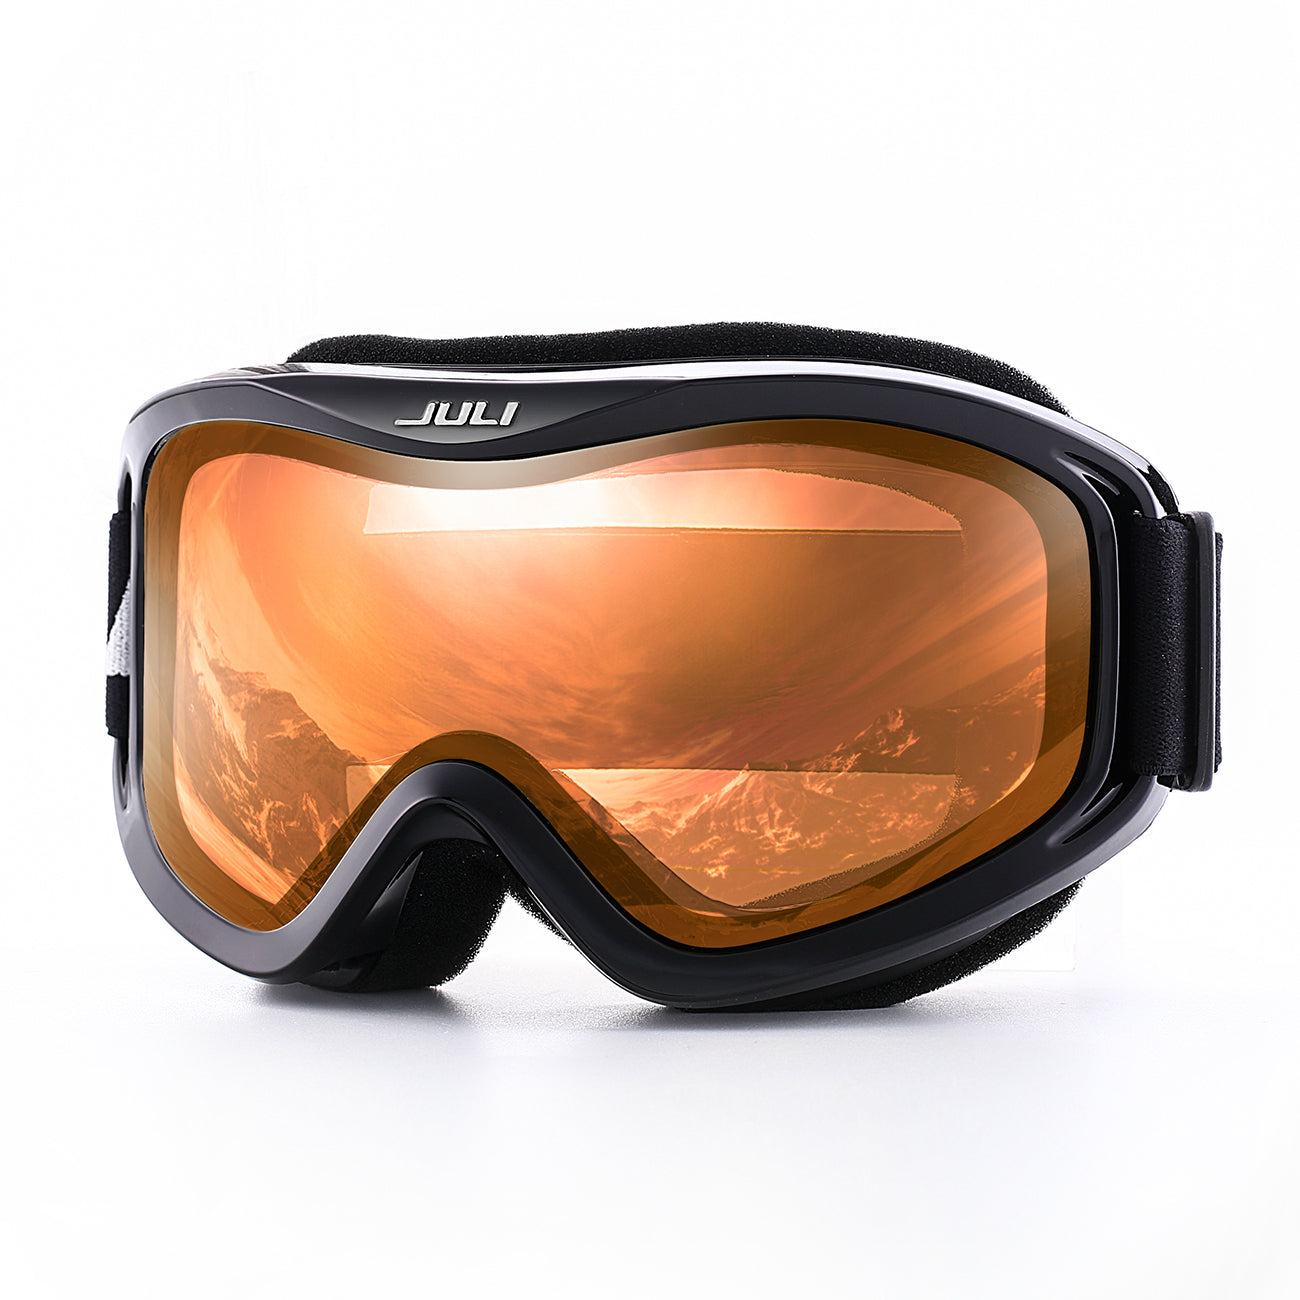 MAXJULI classic ski double anti-fog goggles